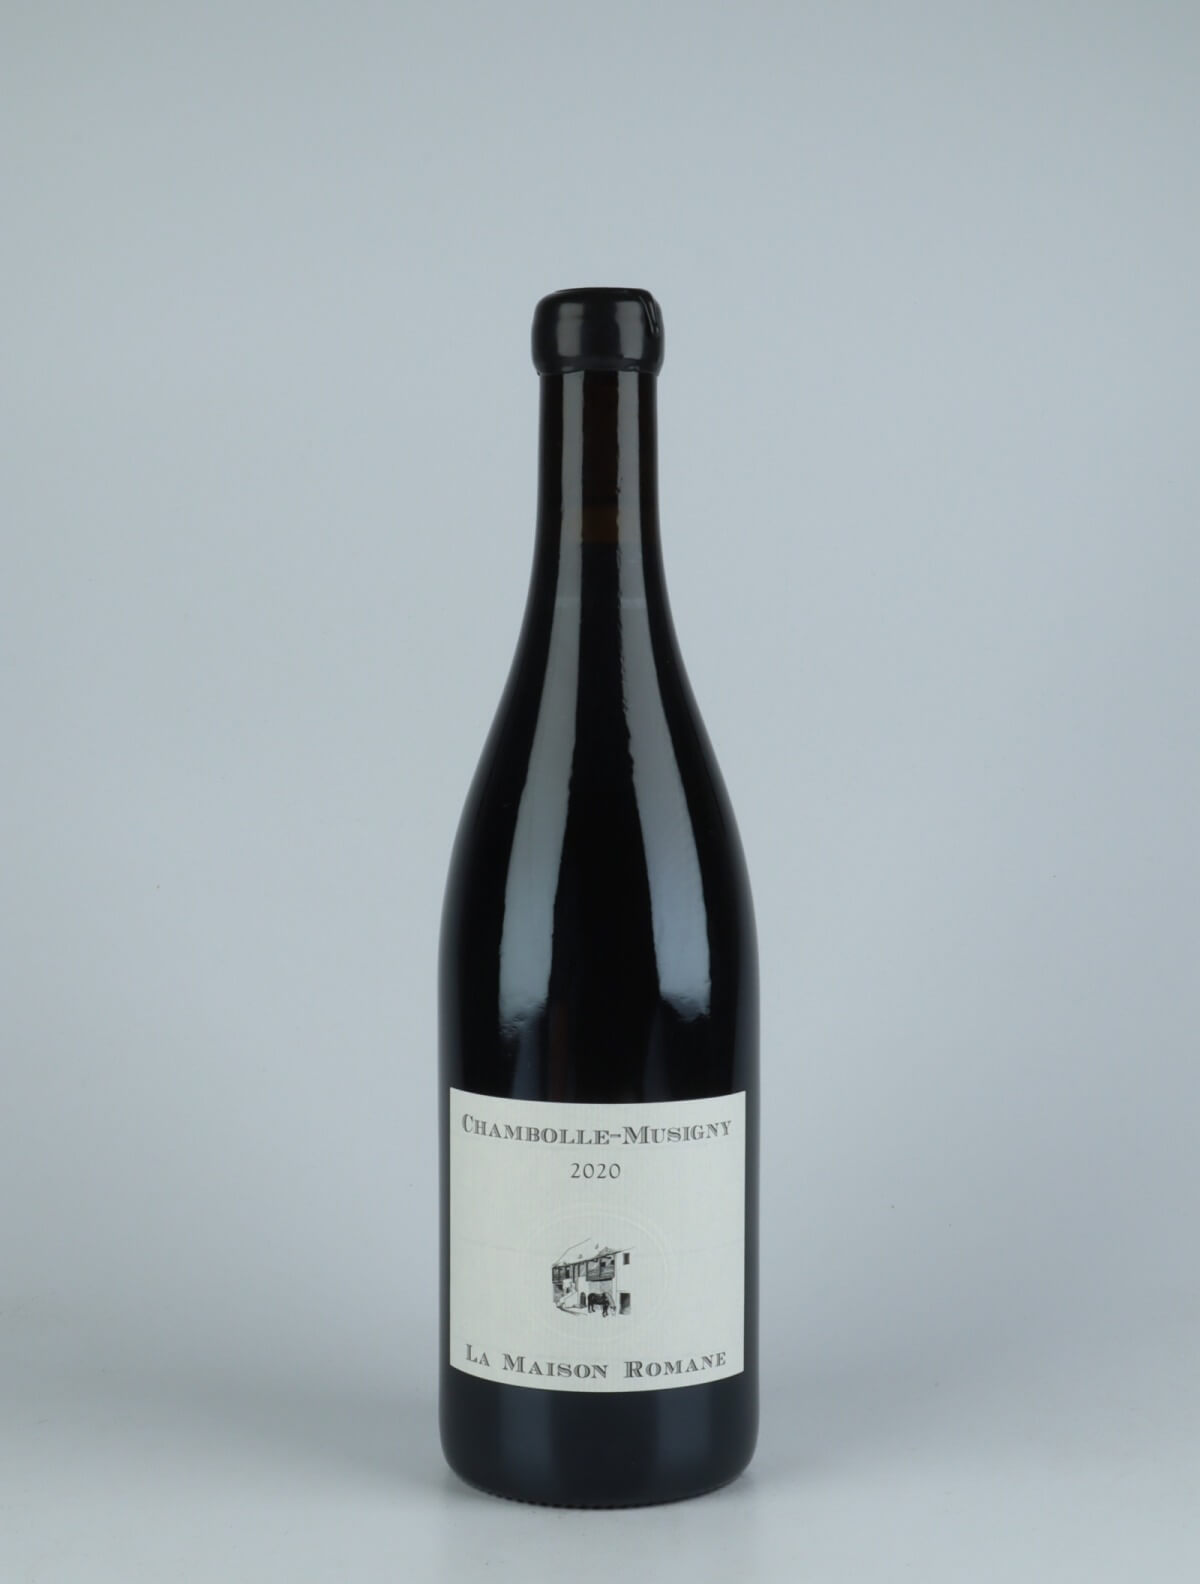 En flaske 2020 Chambolle Musigny Rødvin fra La Maison Romane, Bourgogne i Frankrig